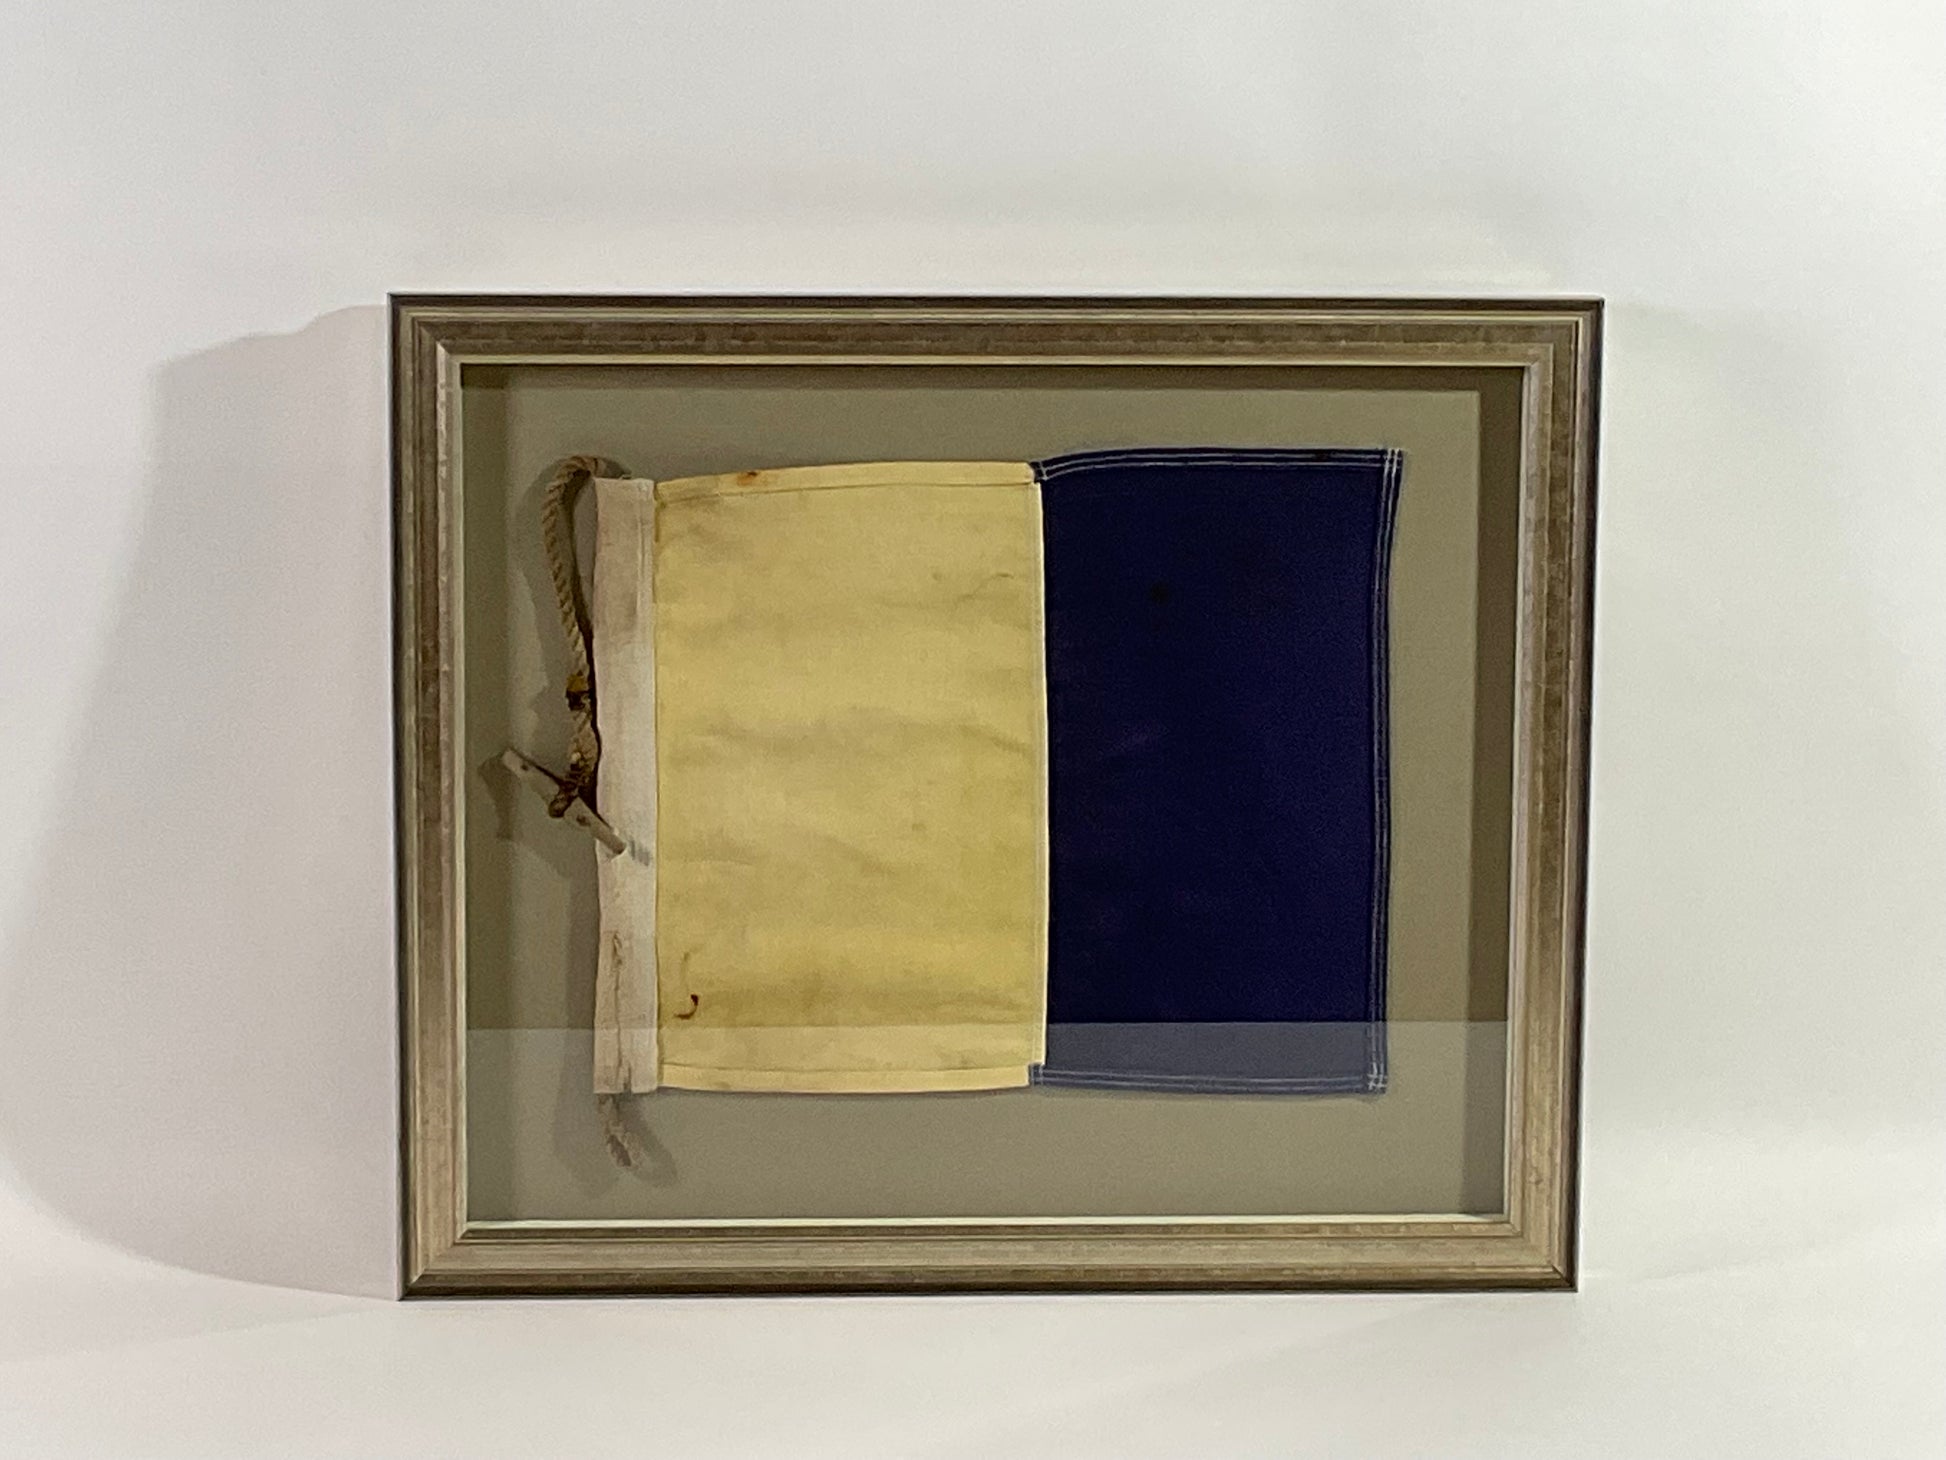 Vintage Nautical Signal Flag in Frame - Lannan Gallery